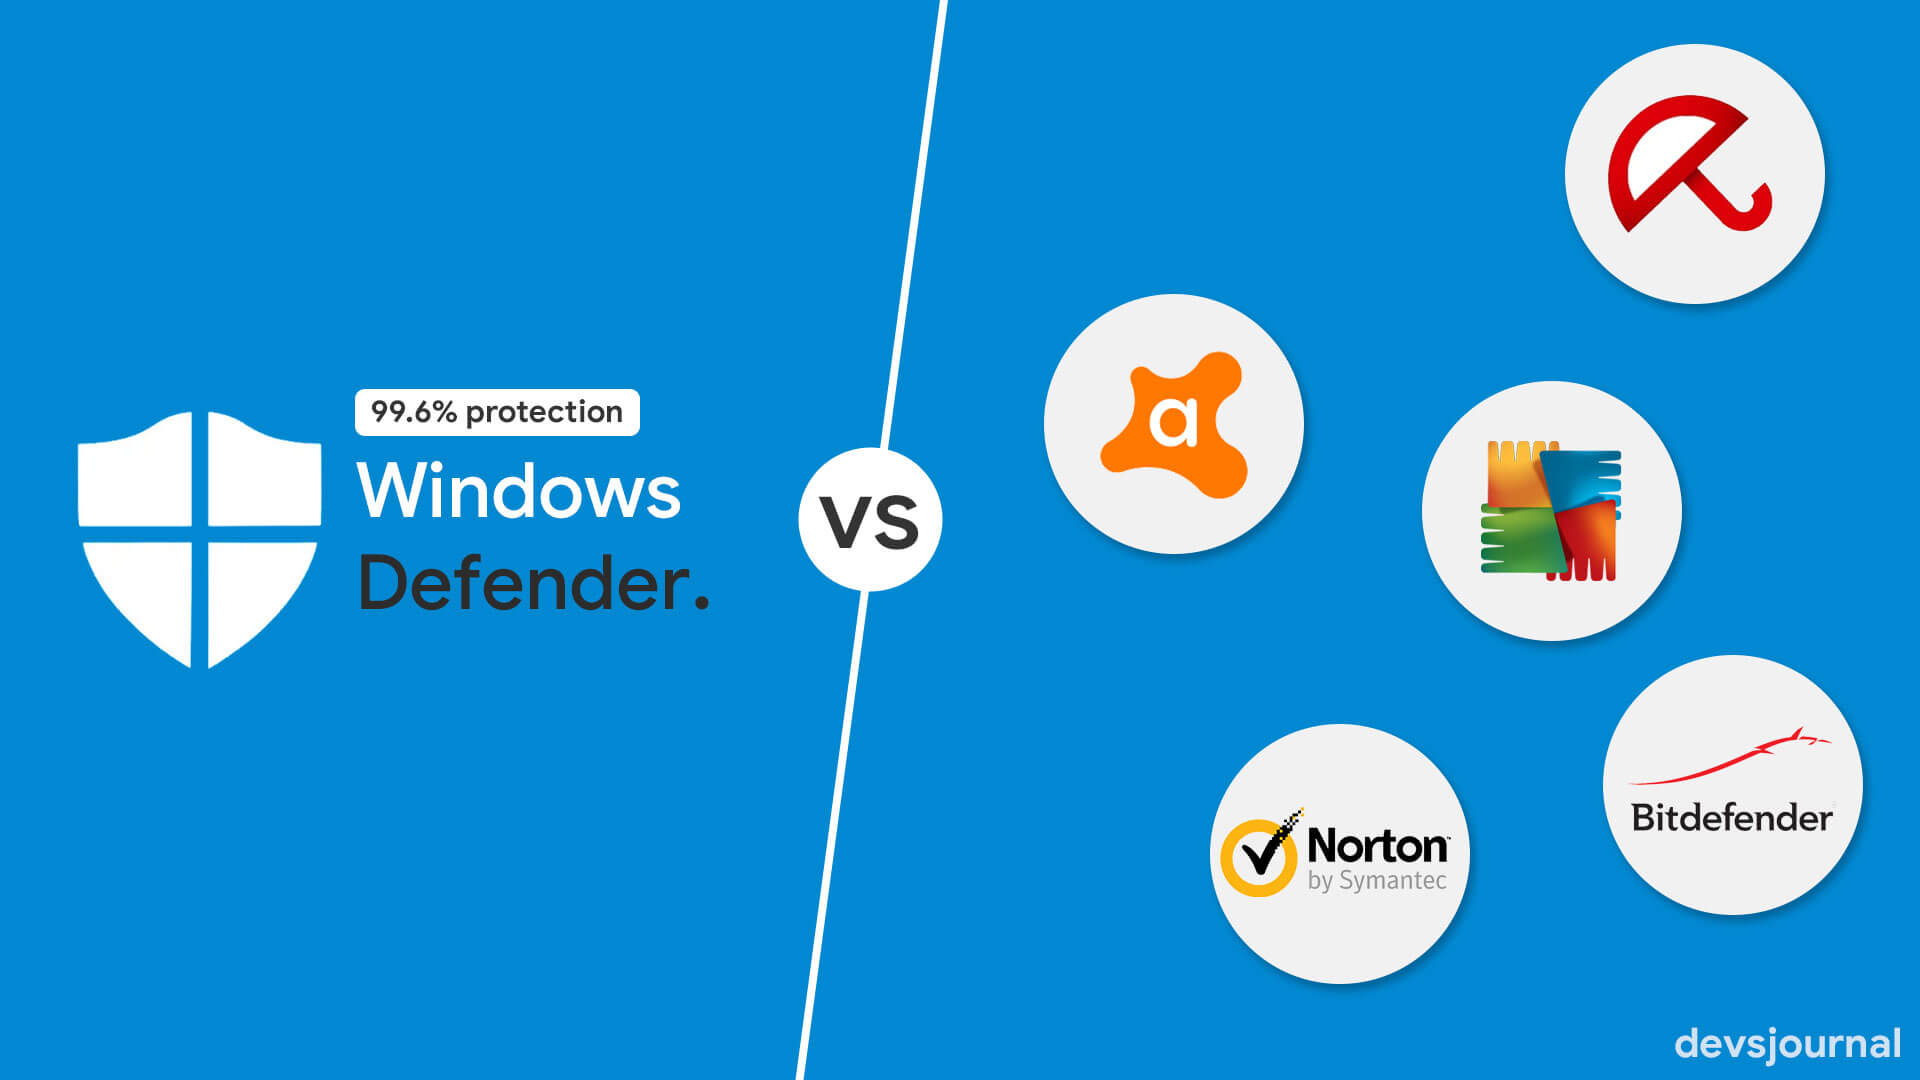 Antivirus Comparison Test Results with Windows Defender